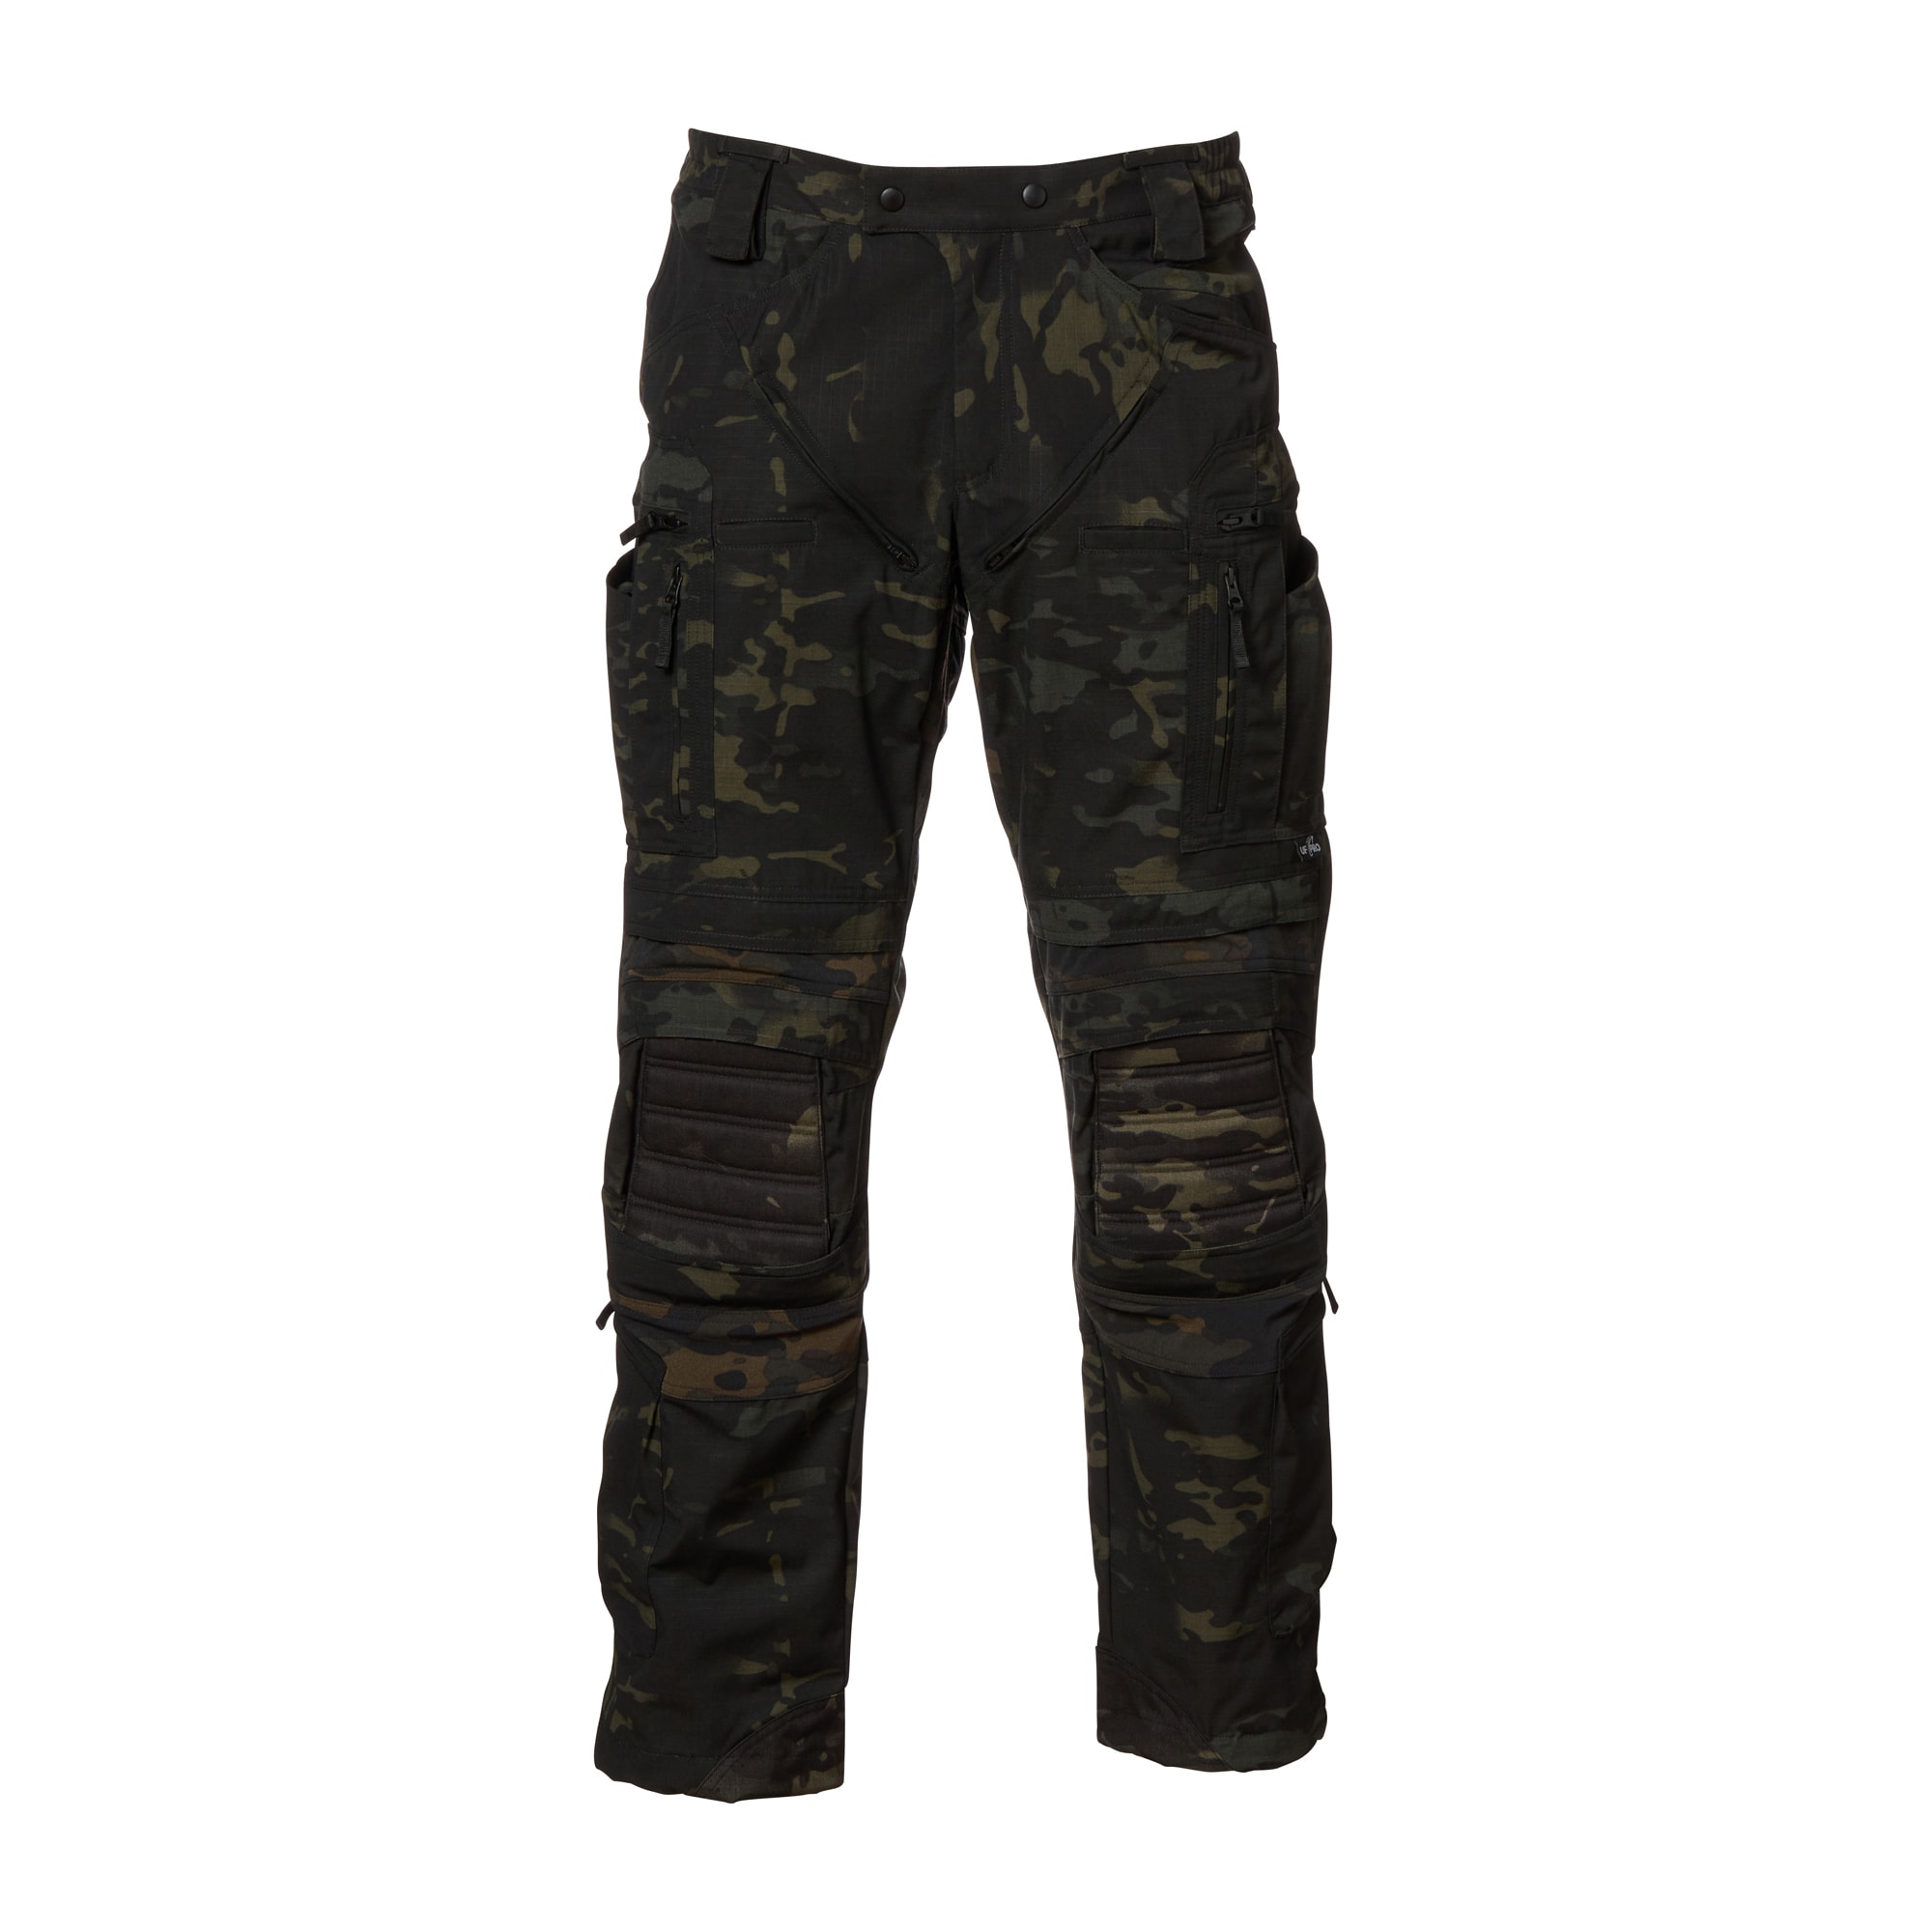 Purchase the UF Pro Striker HT Combat Pants multicam/black by AS